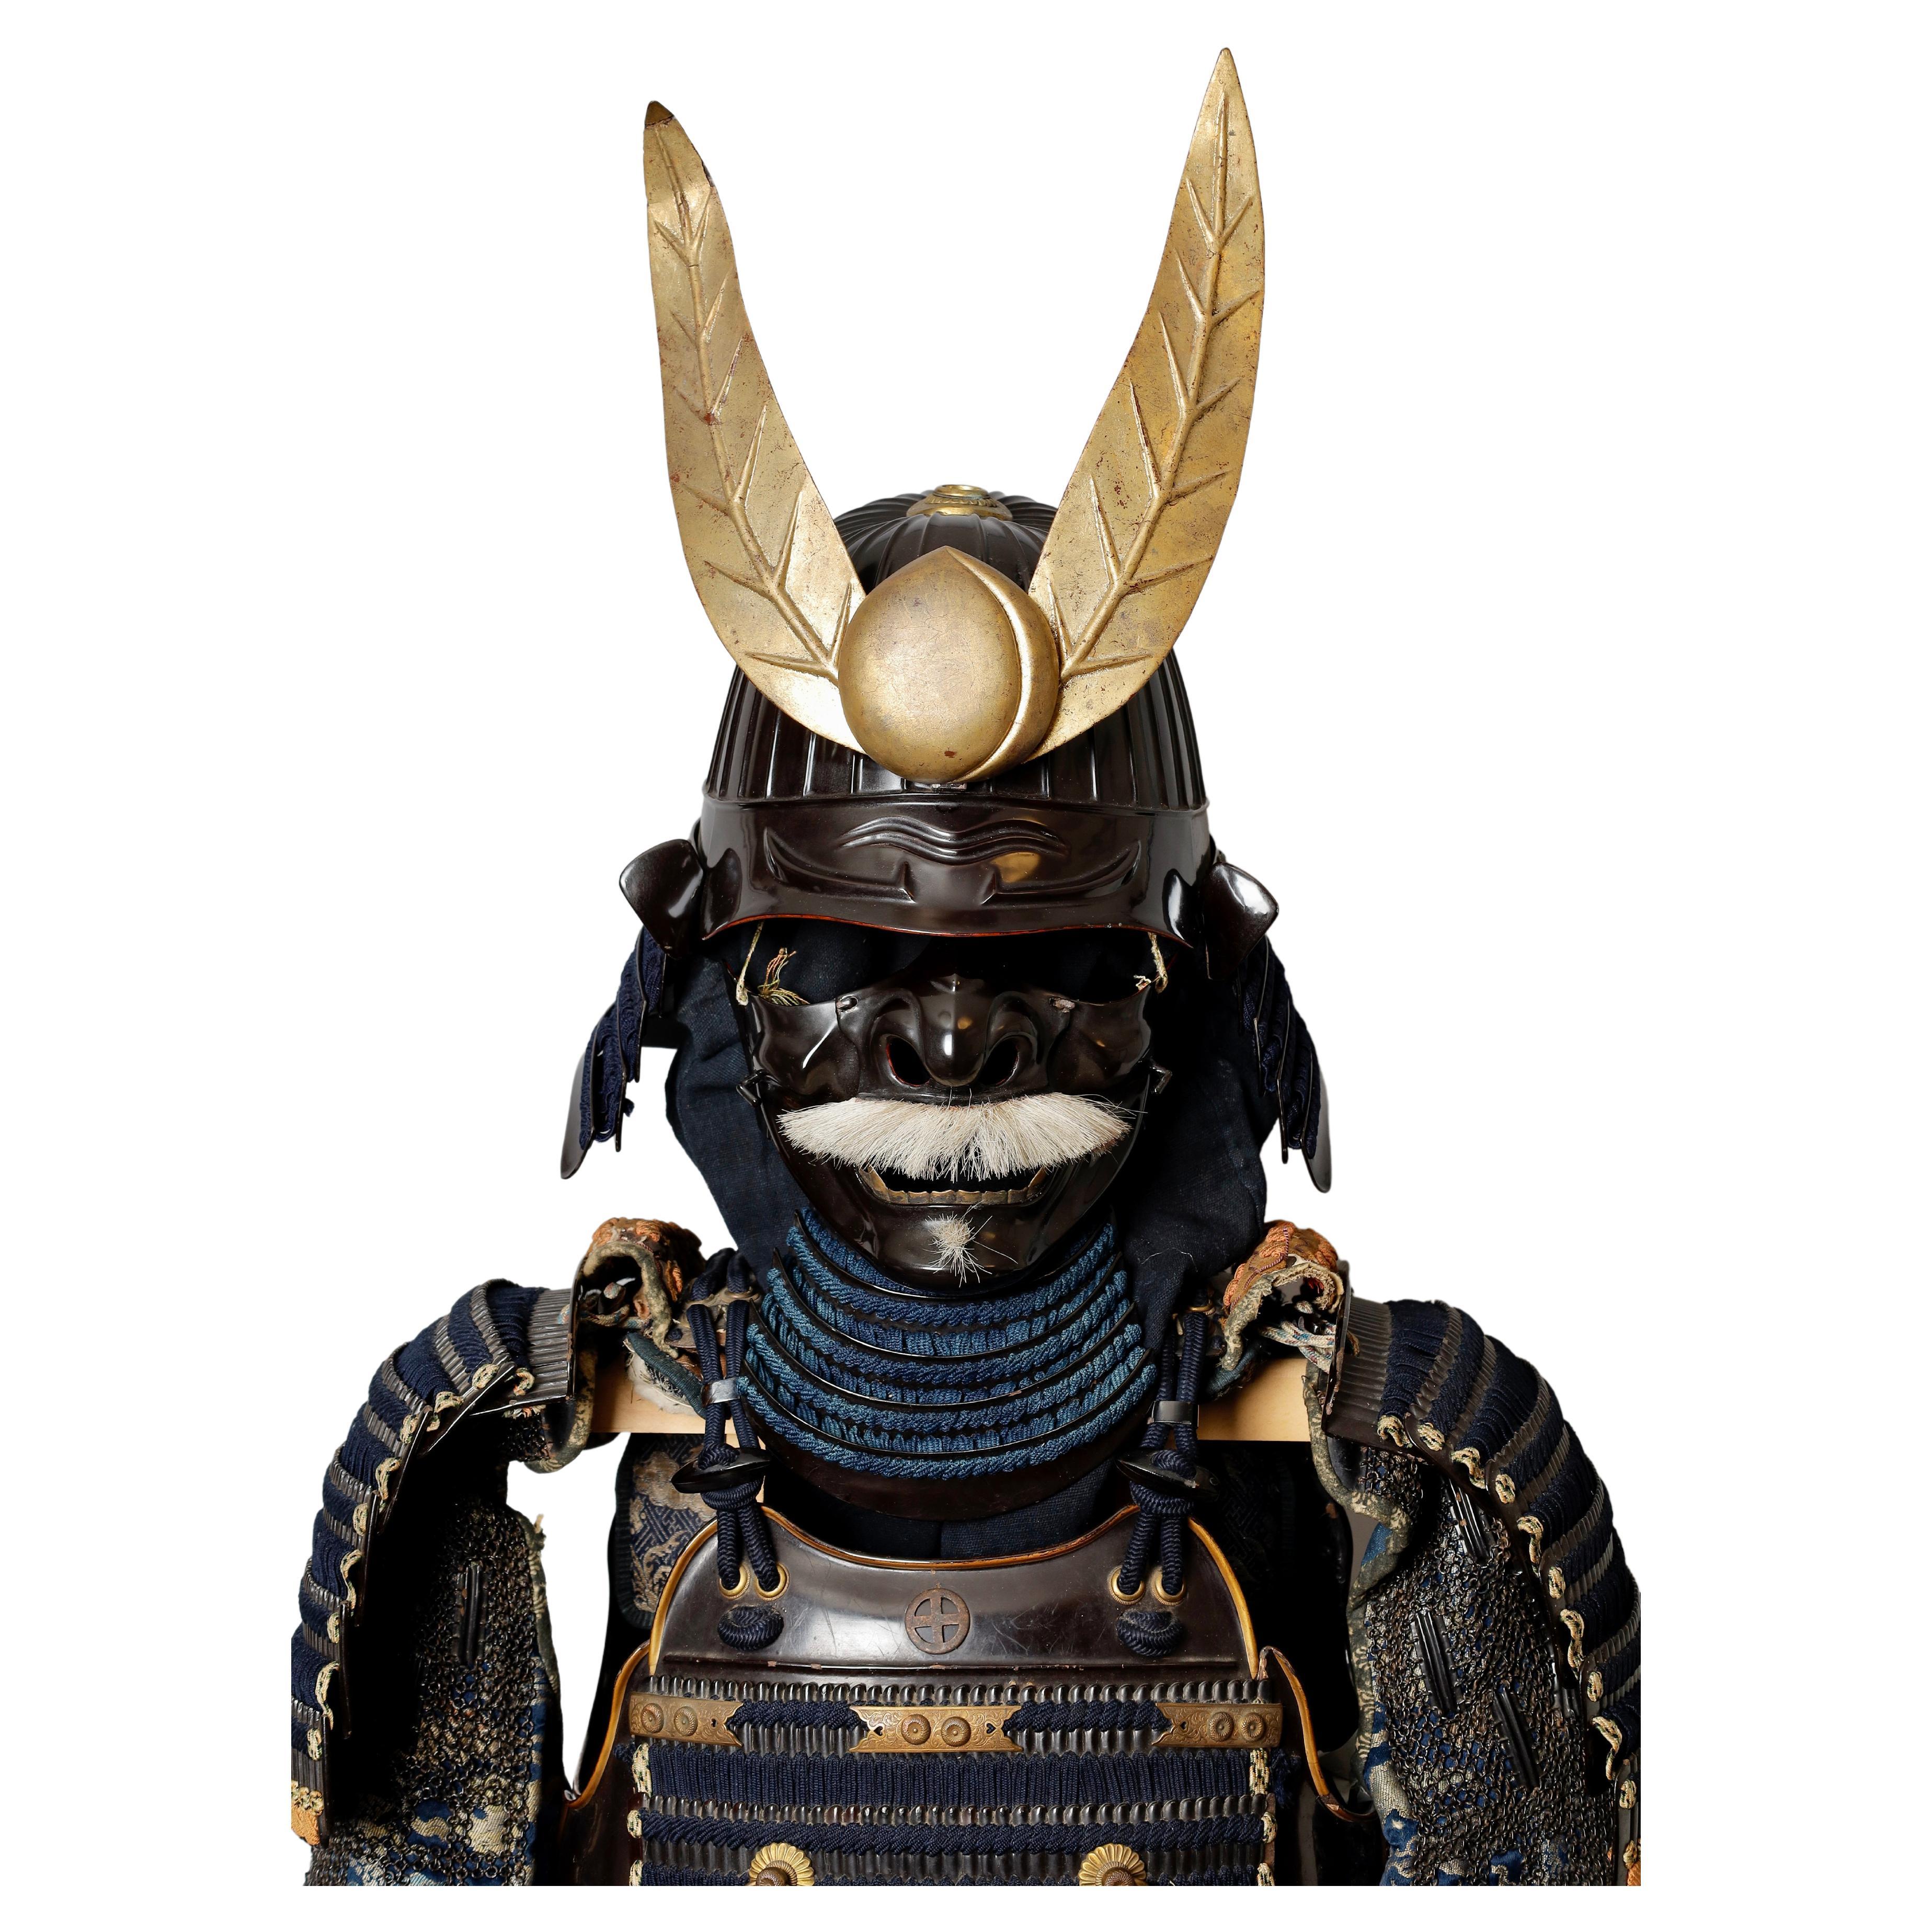 Certified Highly Graded 18th Century Yoroi, Suit of Samurai Armor